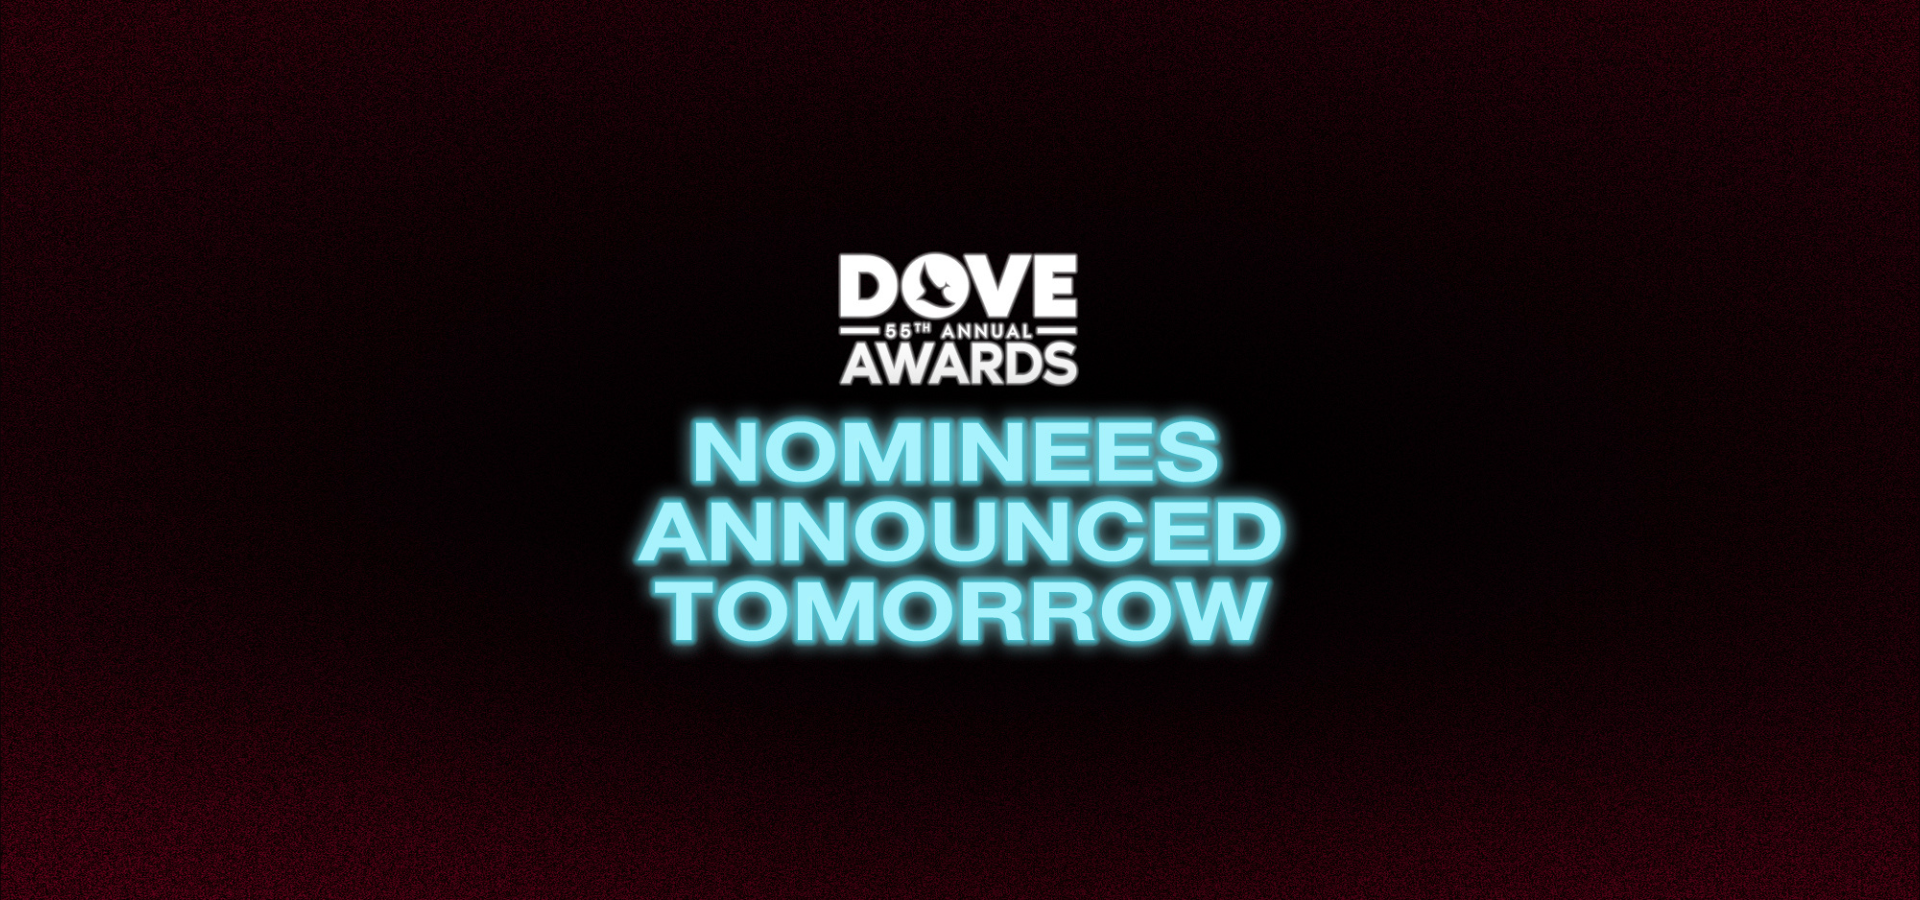 Nominee Reveal Tomorrow: 55th Annual GMA Dove Awards